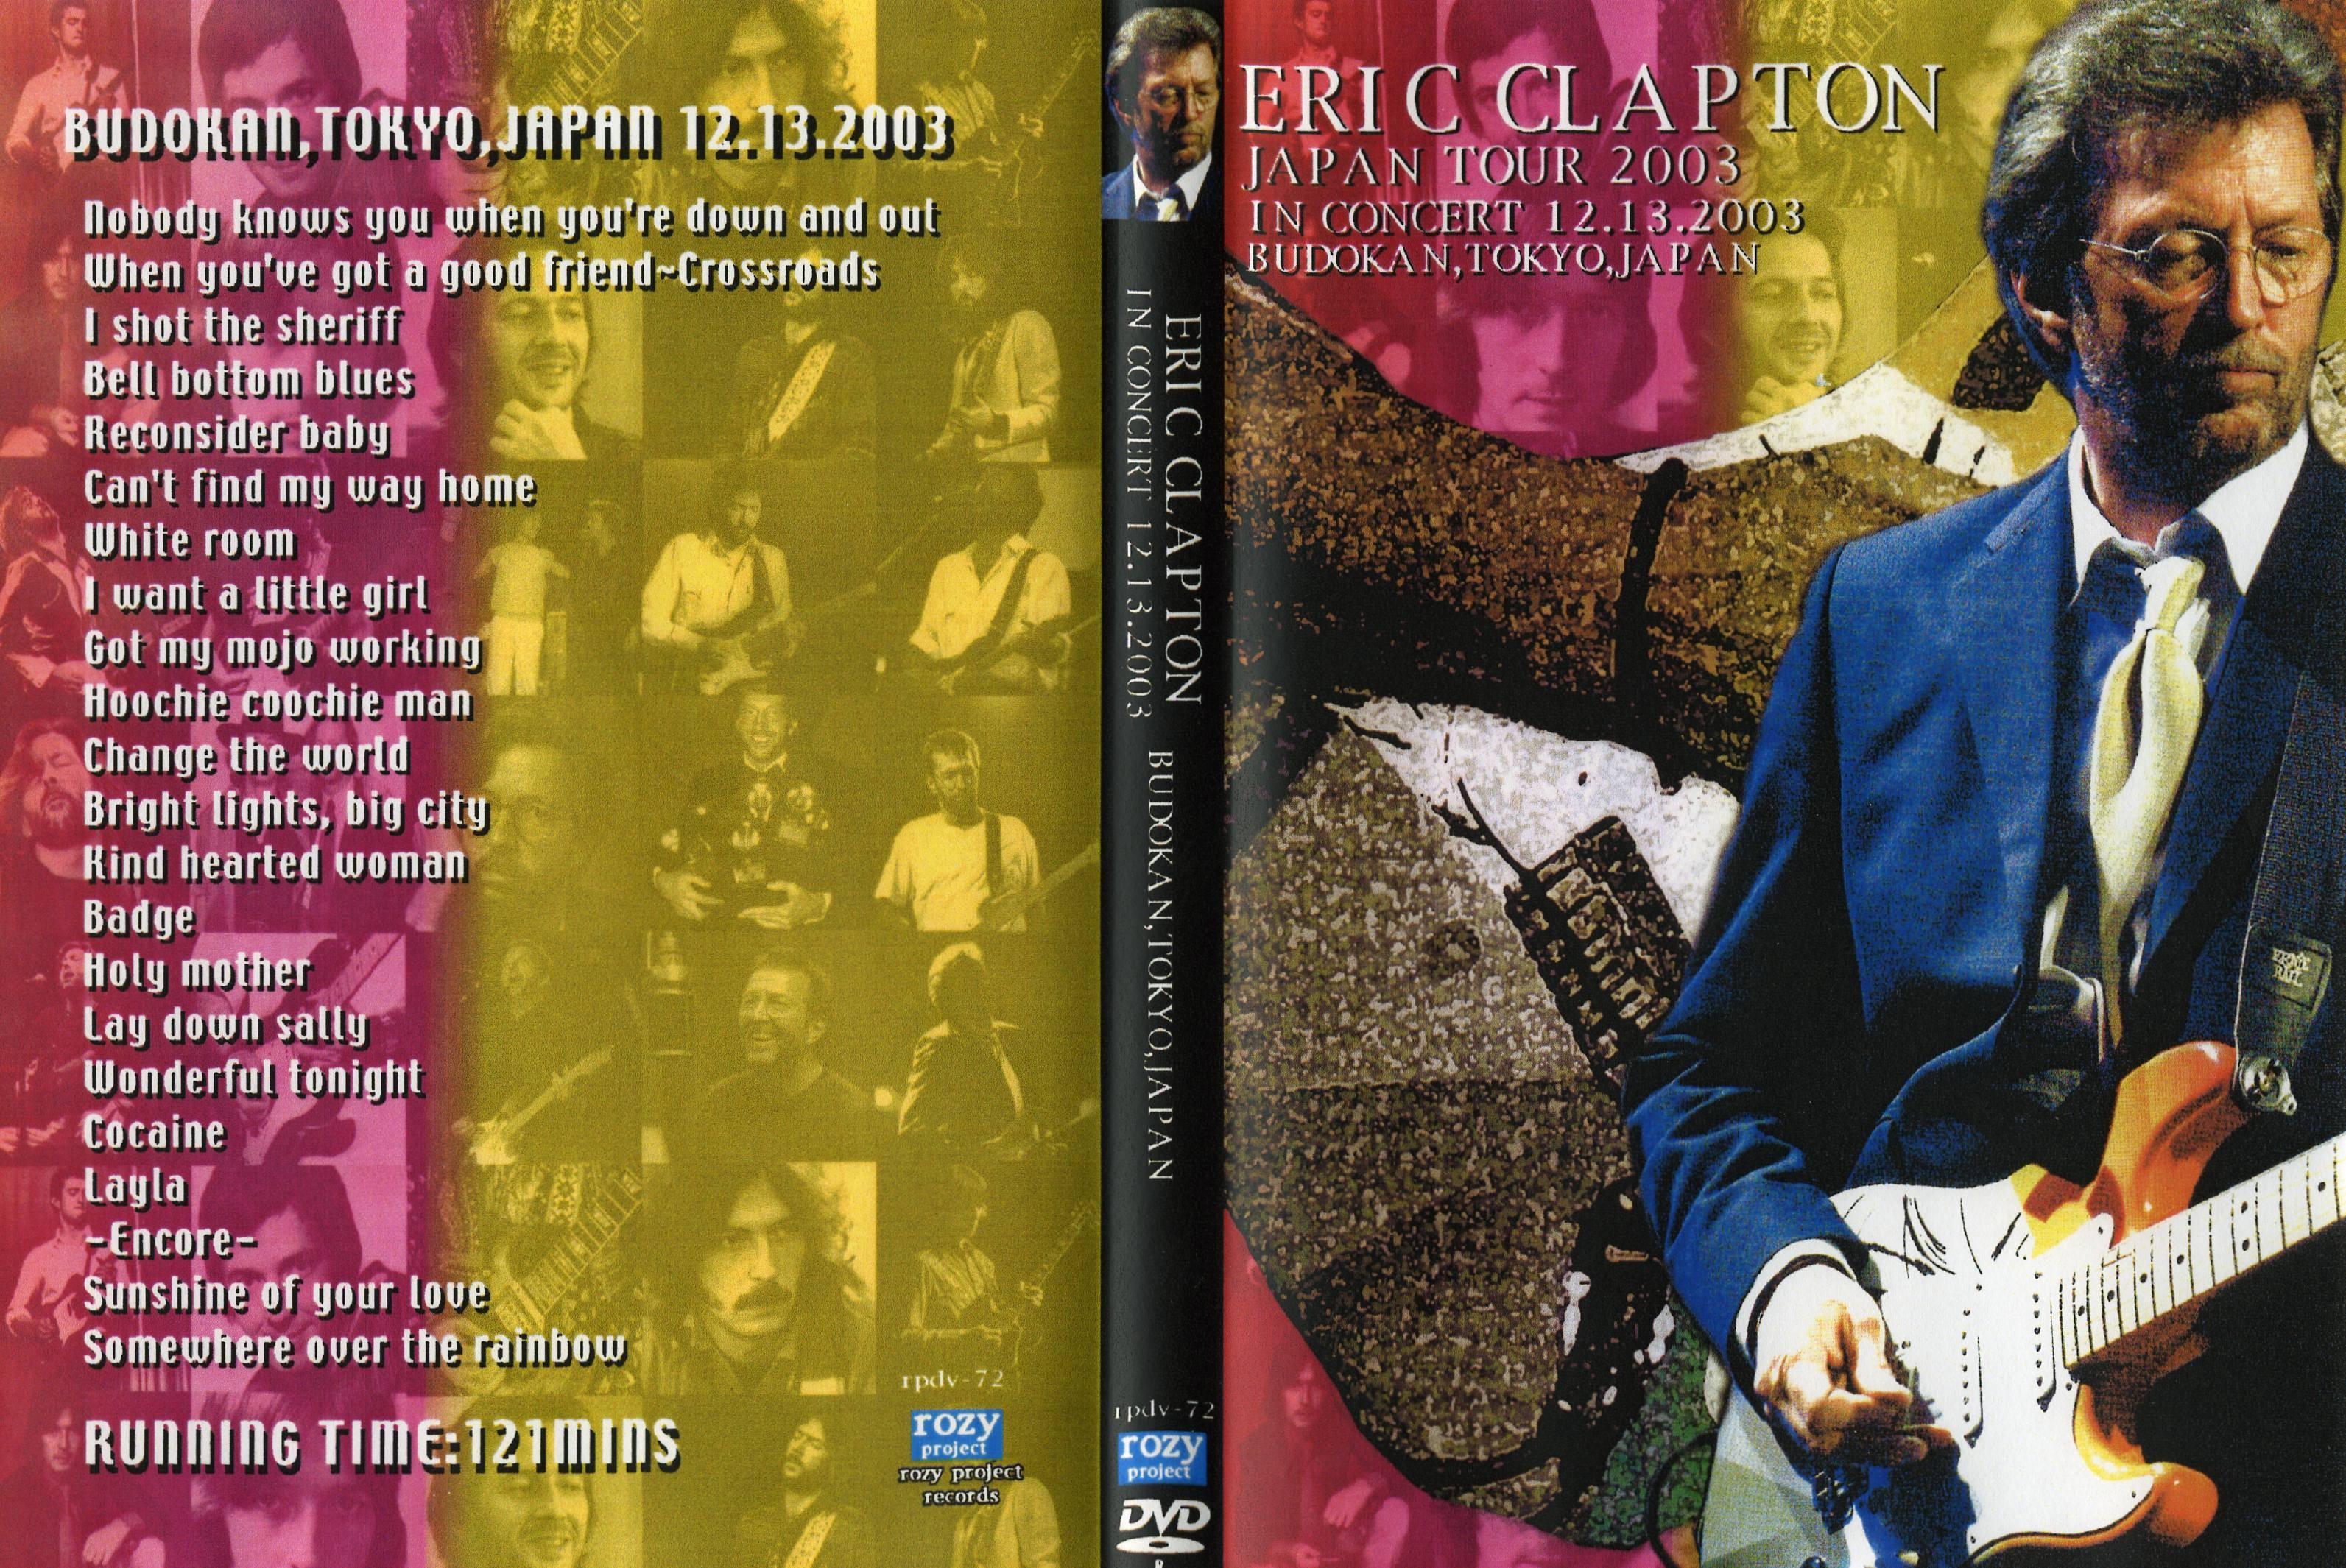 Eric Clapton - Tokyo, Japan - Rozy DVD - December 13, 2003